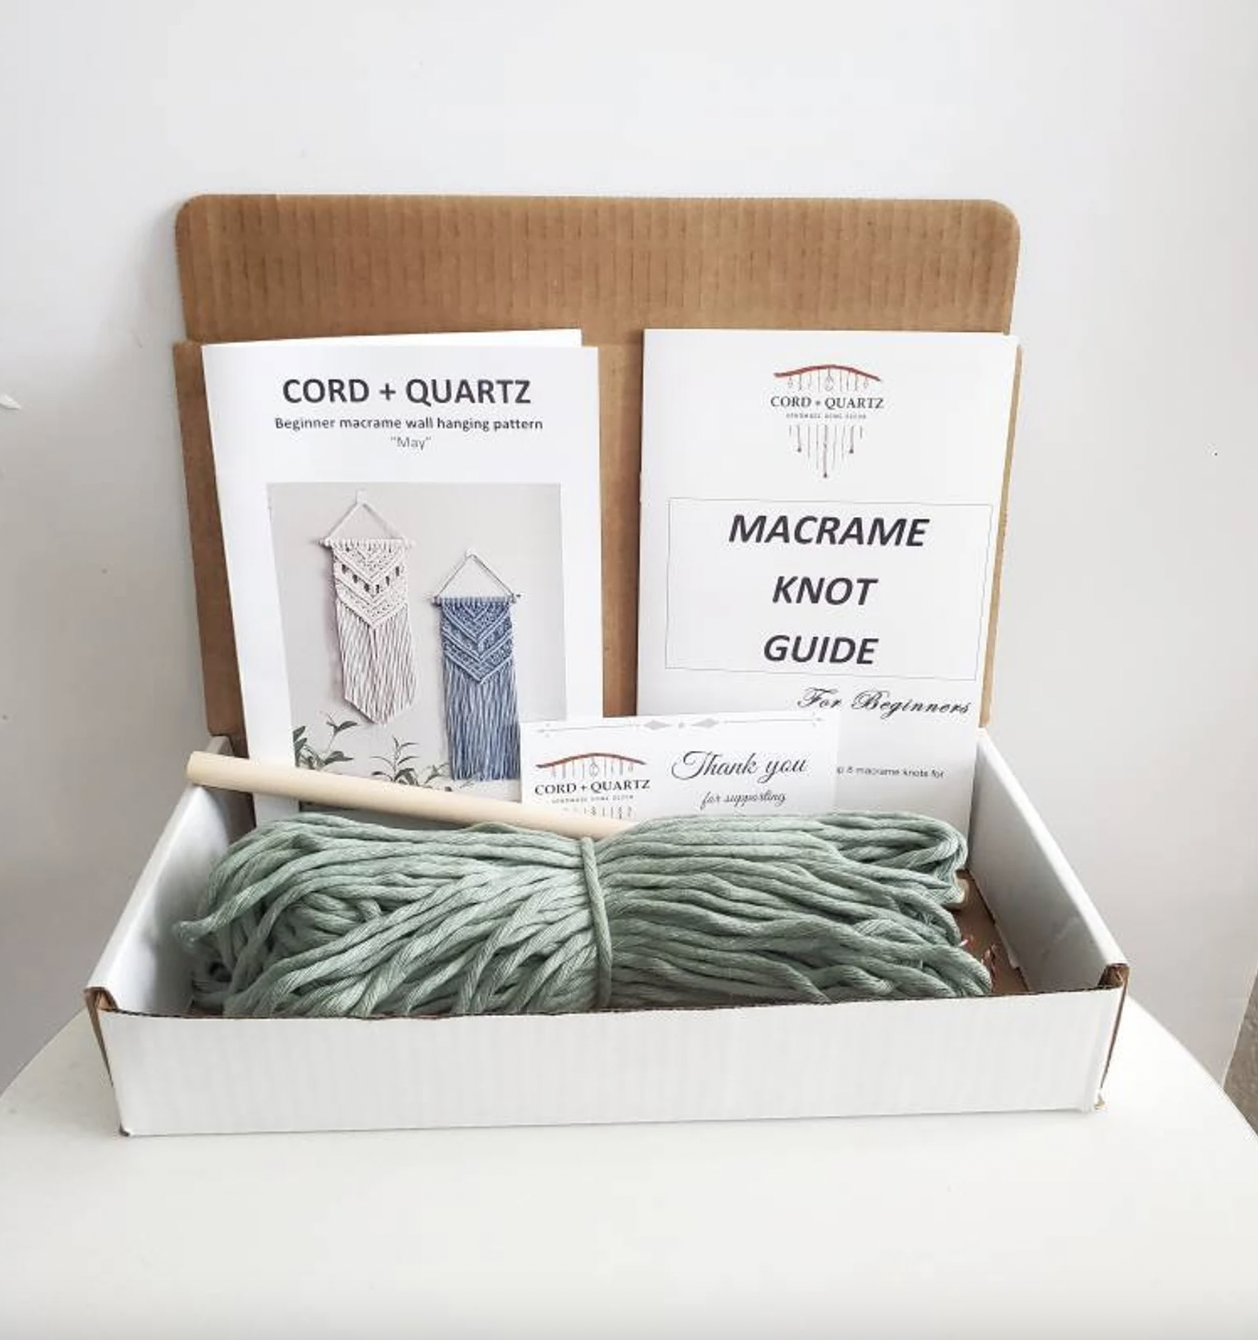 Craft Kits for Adult Women | 6 Colors Macrame Handbag Kit | Supplies:  Pattern Instructions Cord Handles & Craft Bag | Purse DIY Kits for Adults  Women